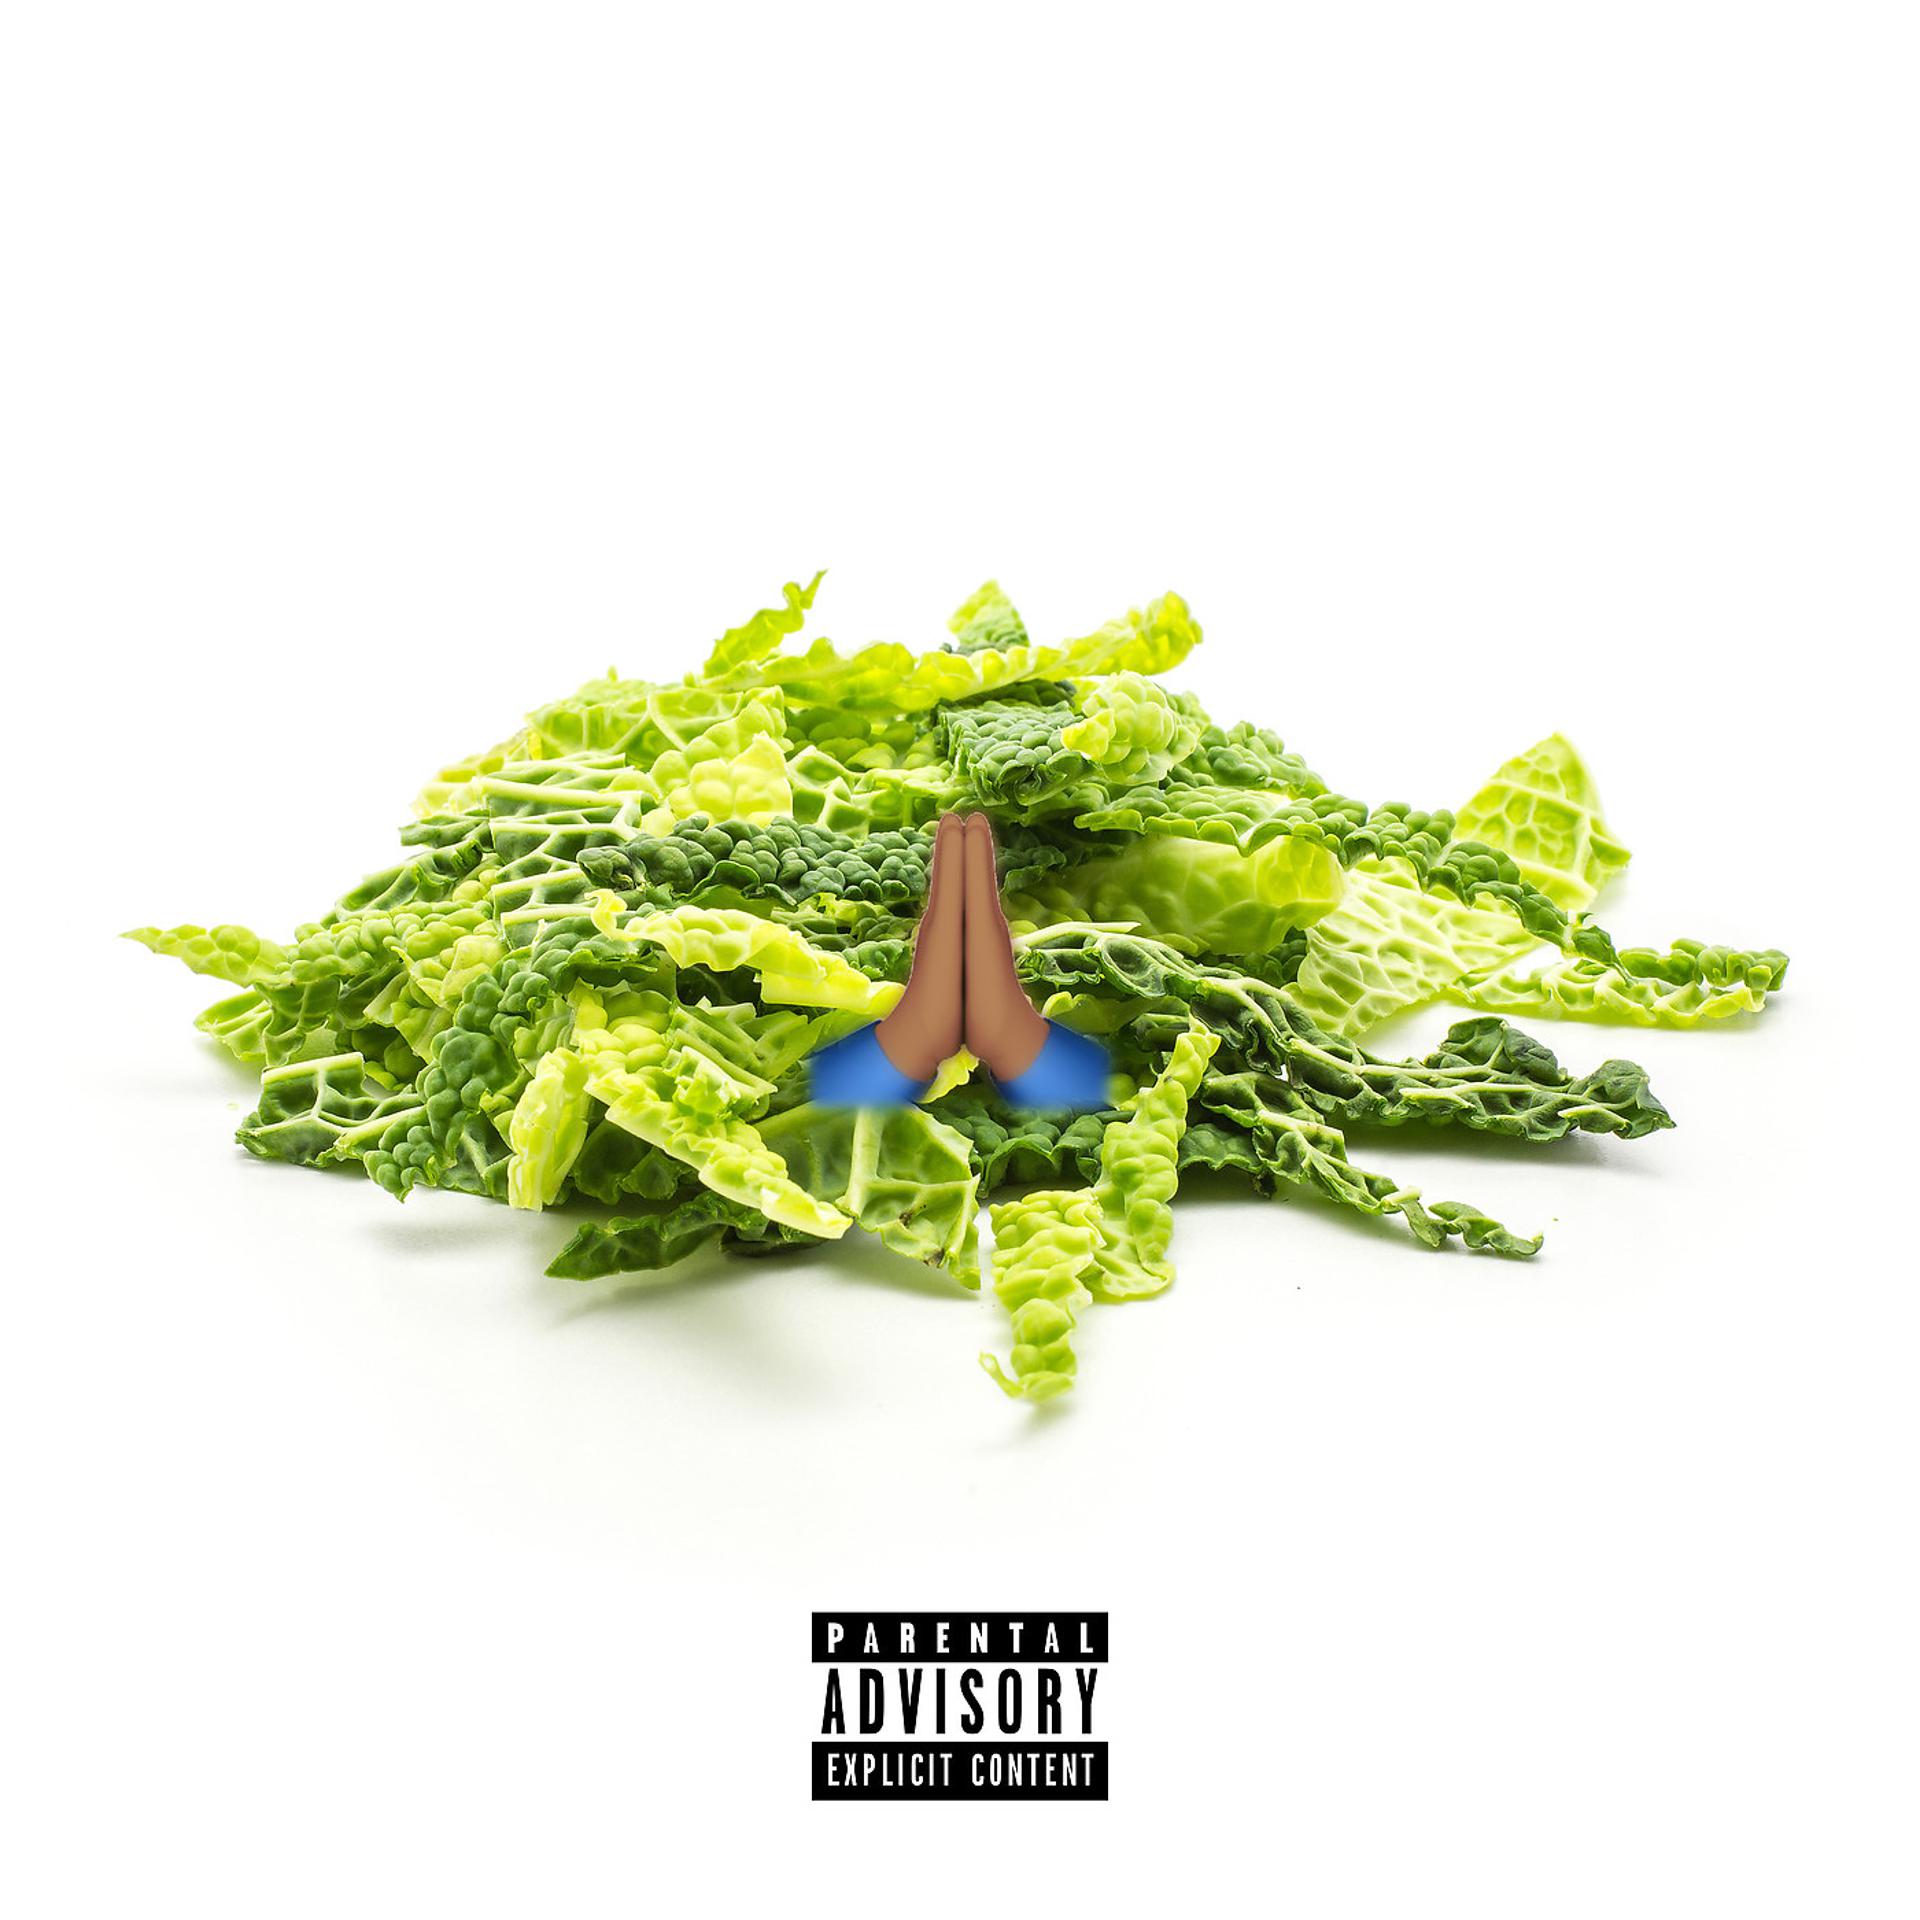 Постер альбома Lettuce Prey